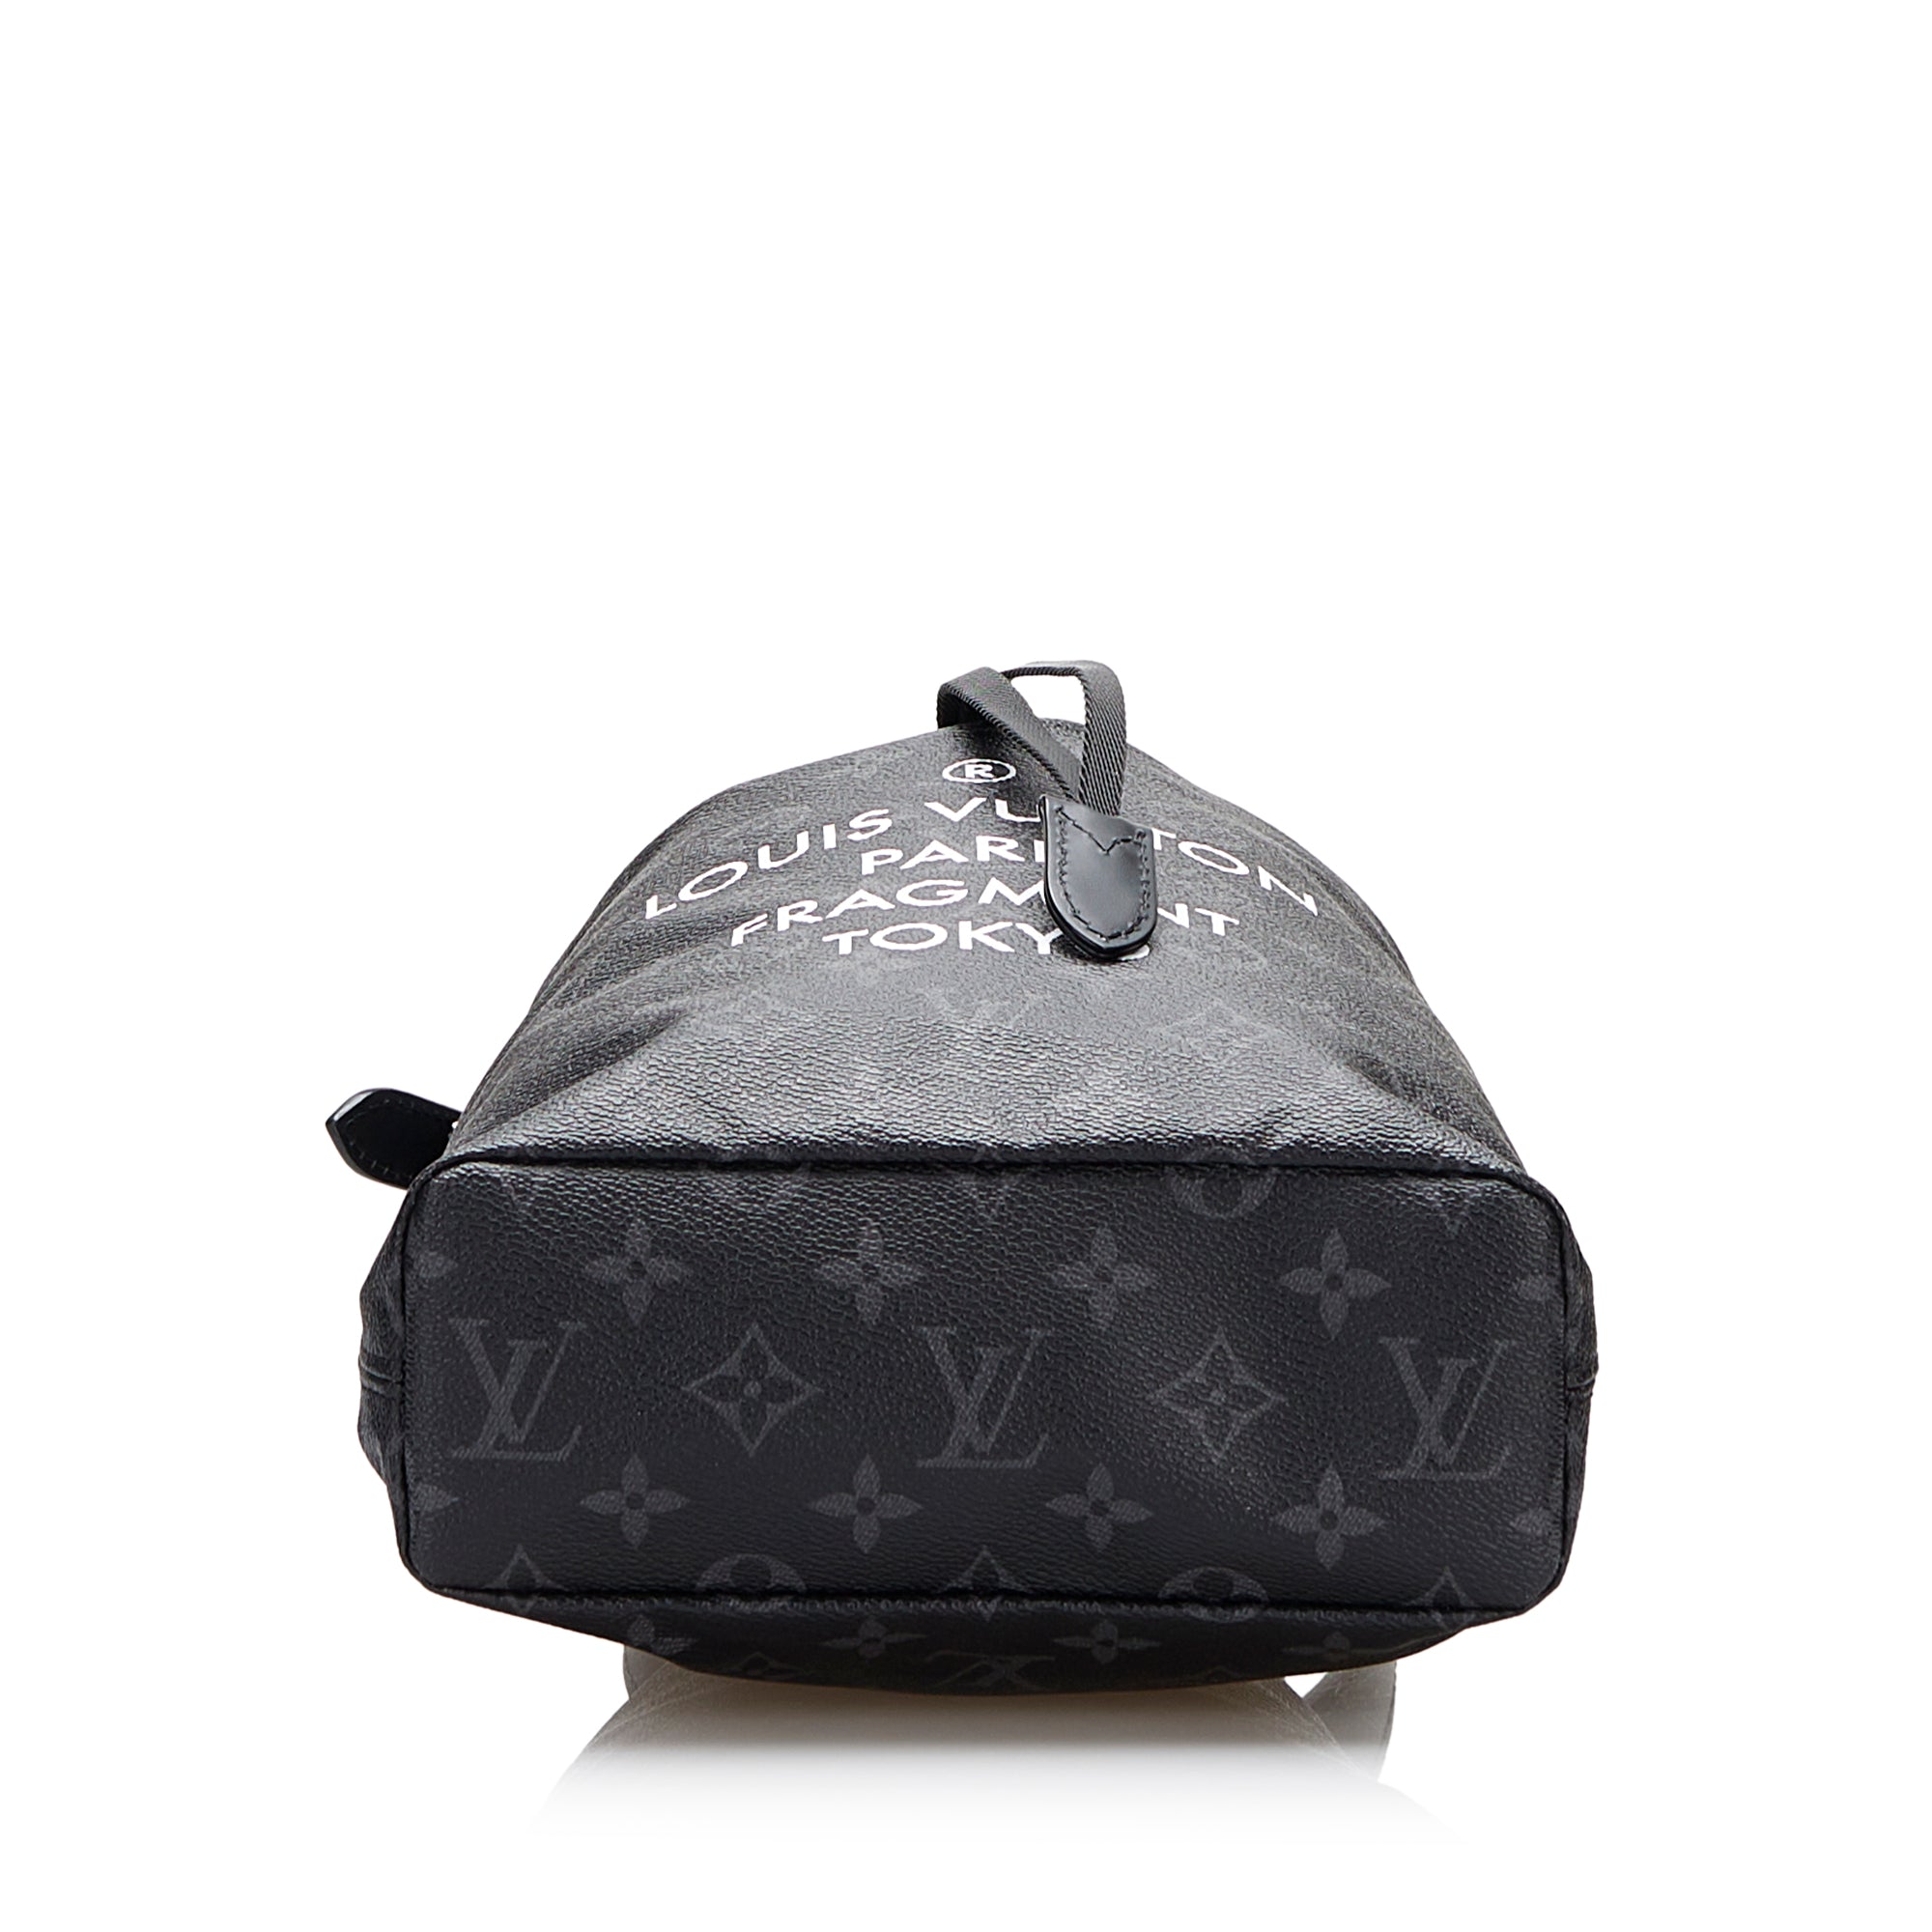 Louis Vuitton Fragment Cabas Light Tote - Black Totes, Bags